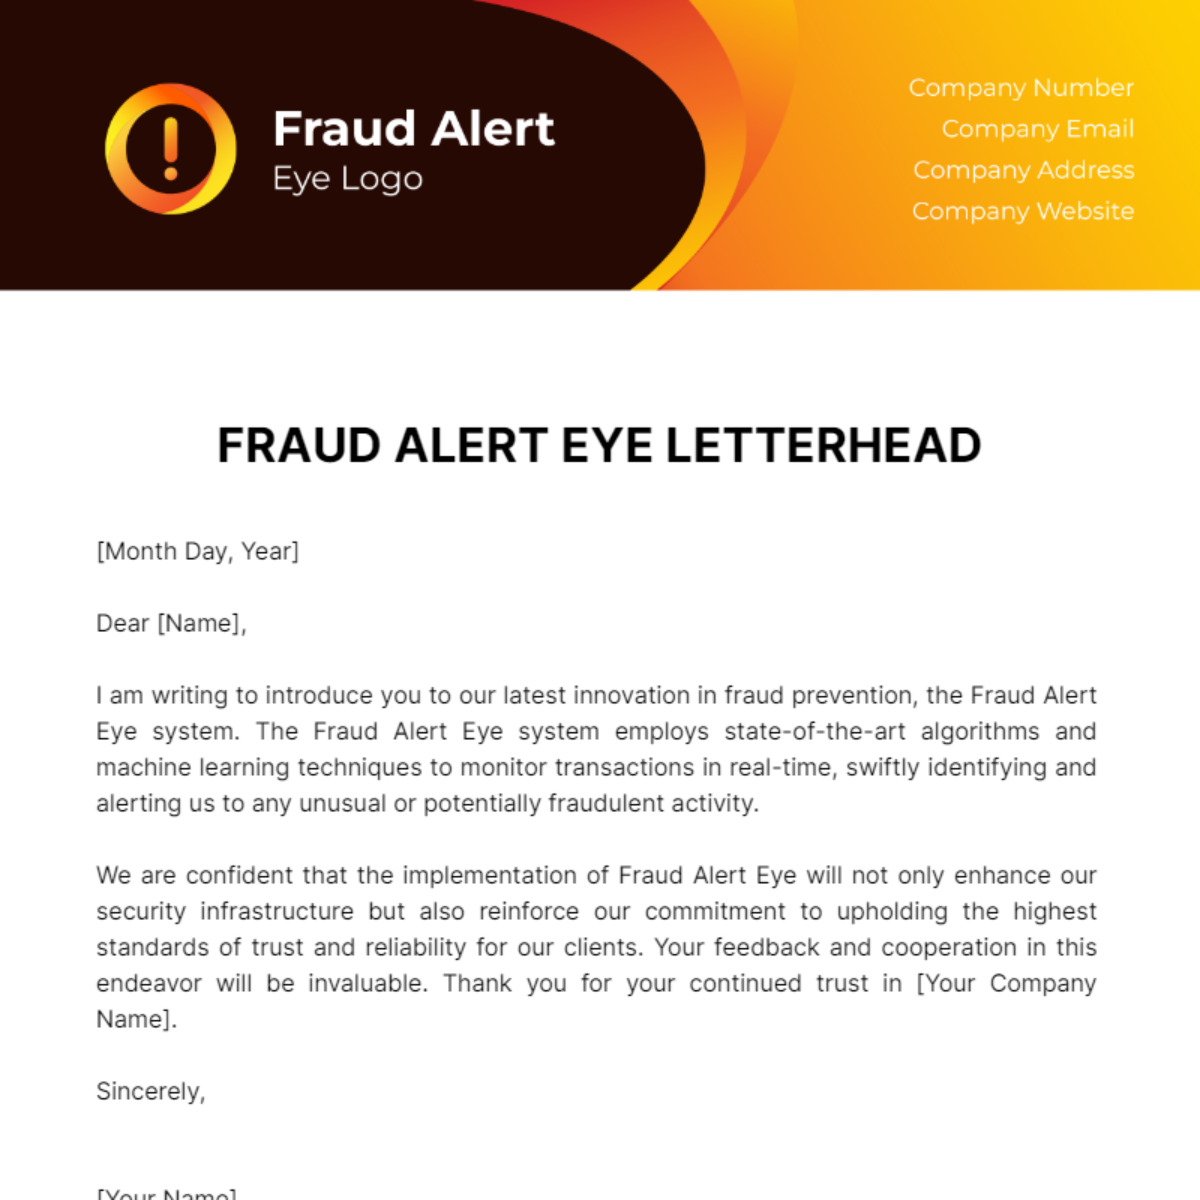 Fraud Alert Eye Letterhead Template